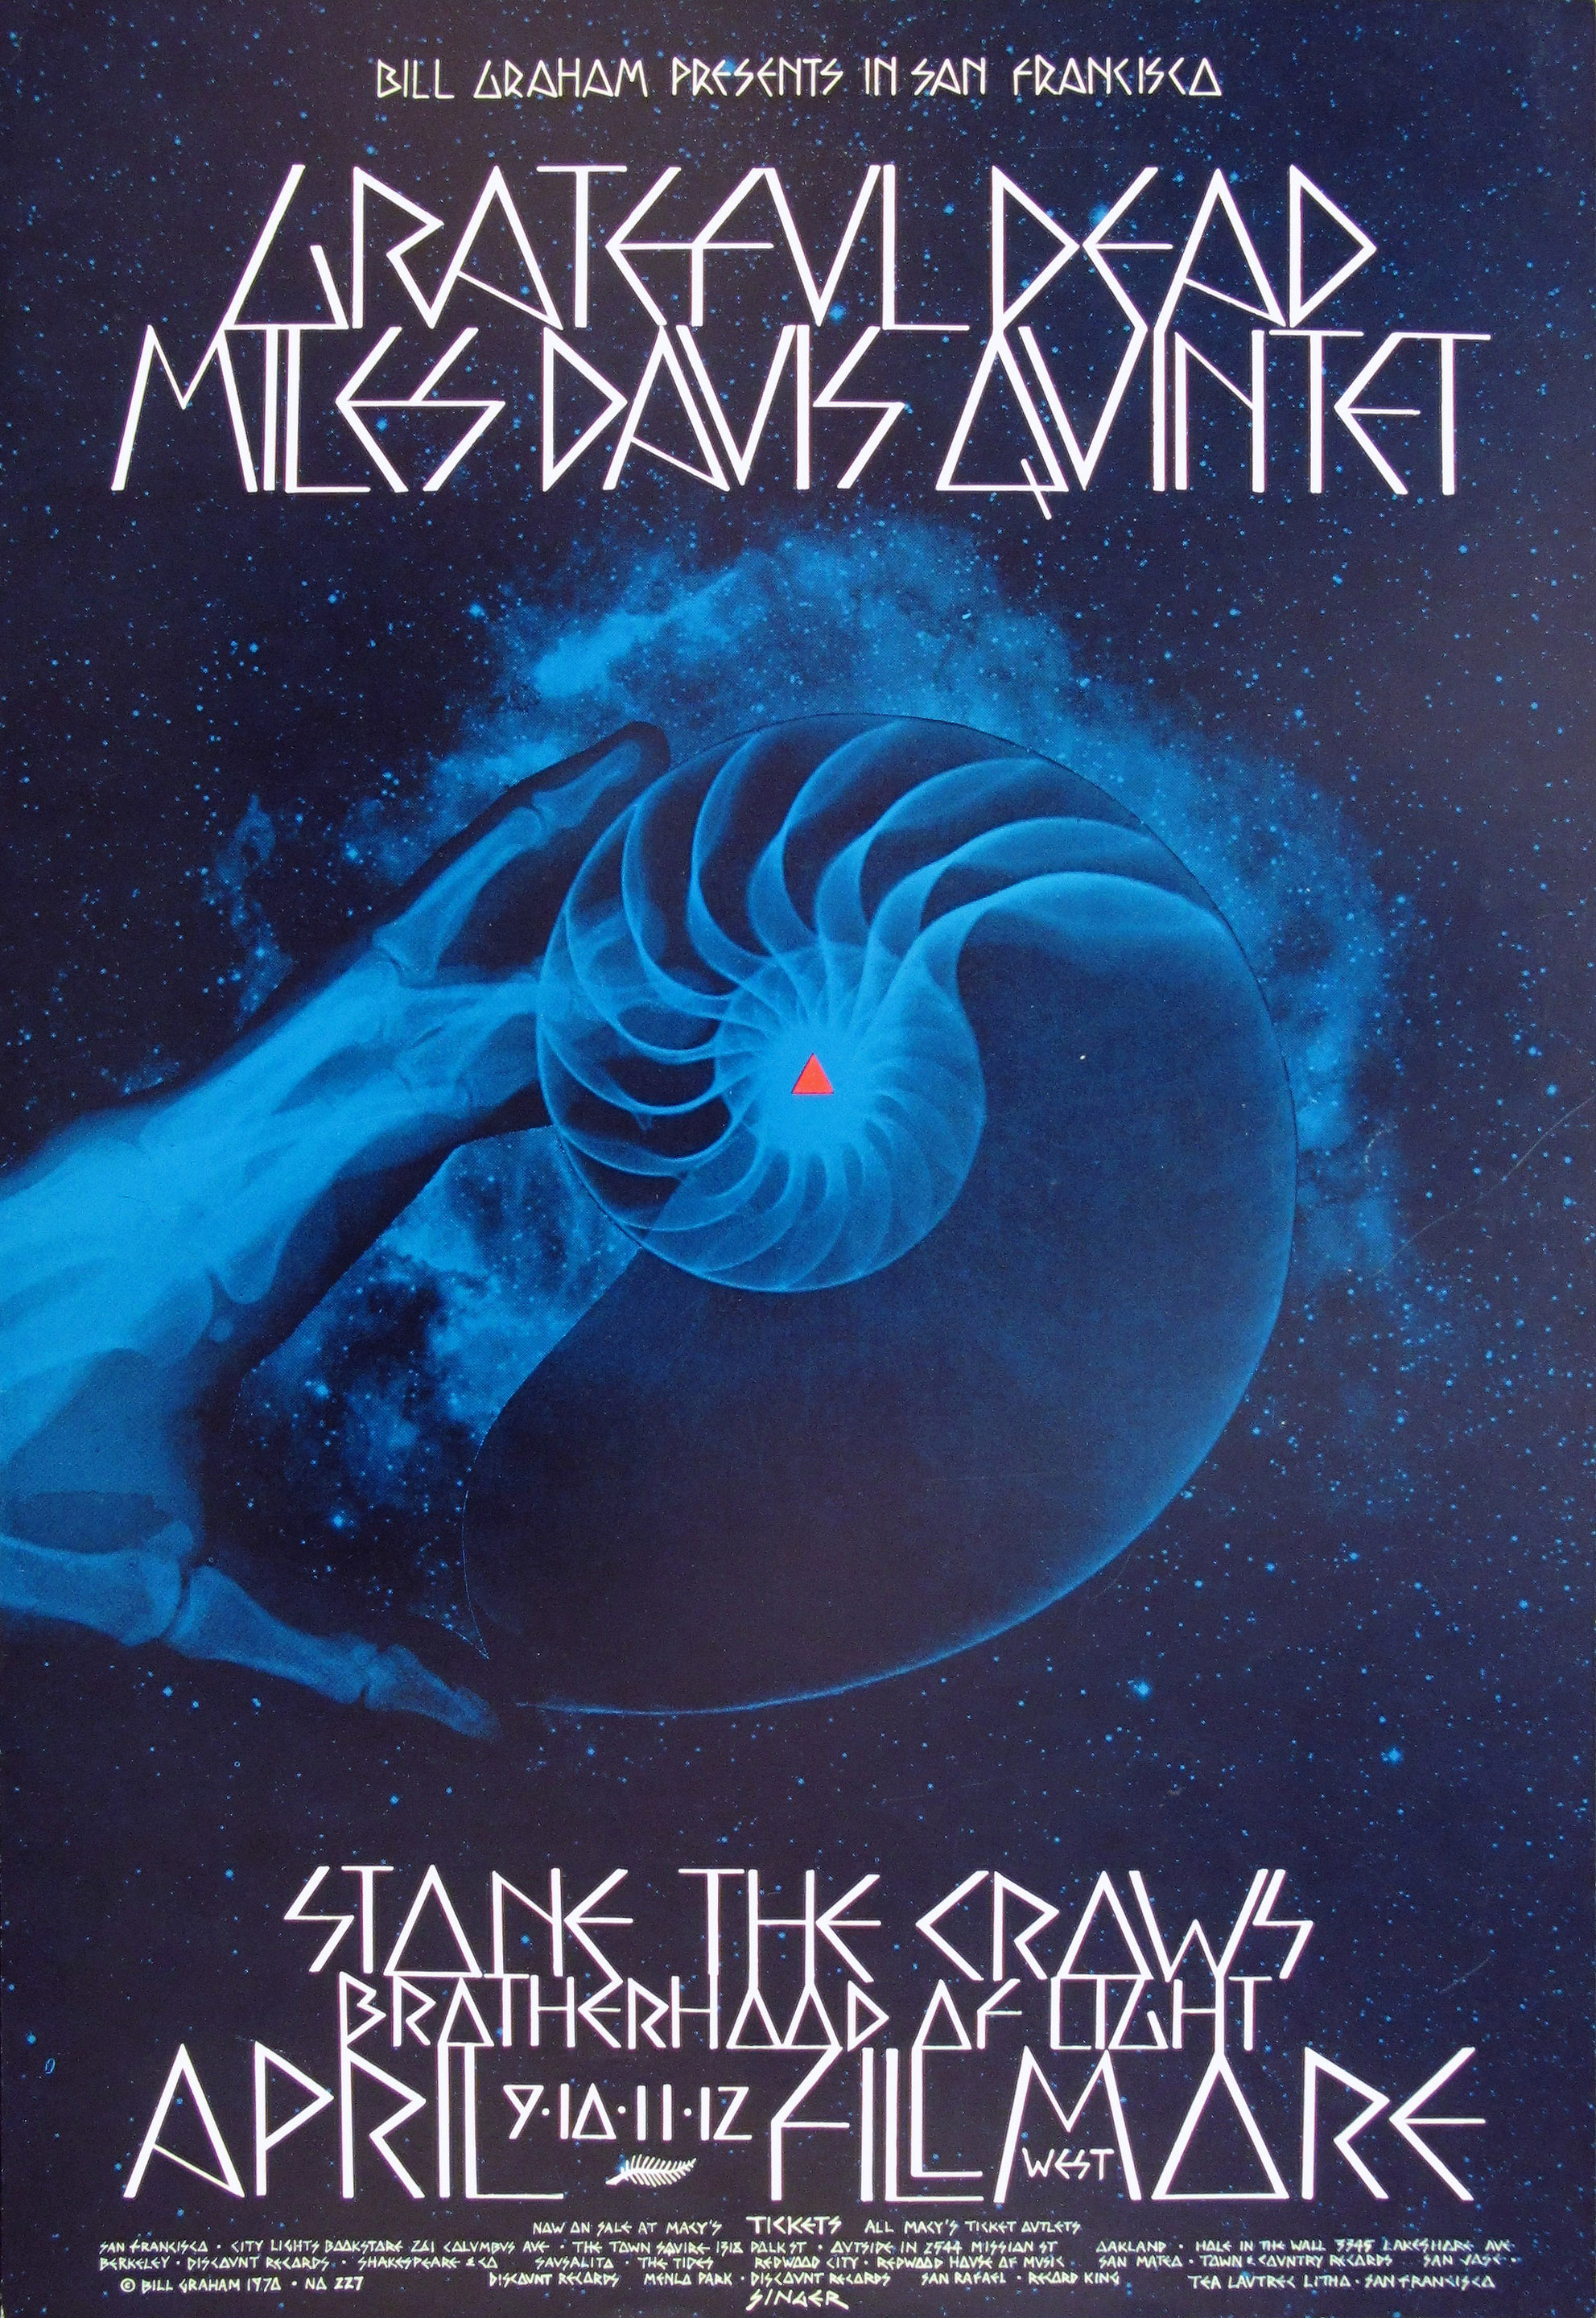 Grateful Dead And Miles Davis